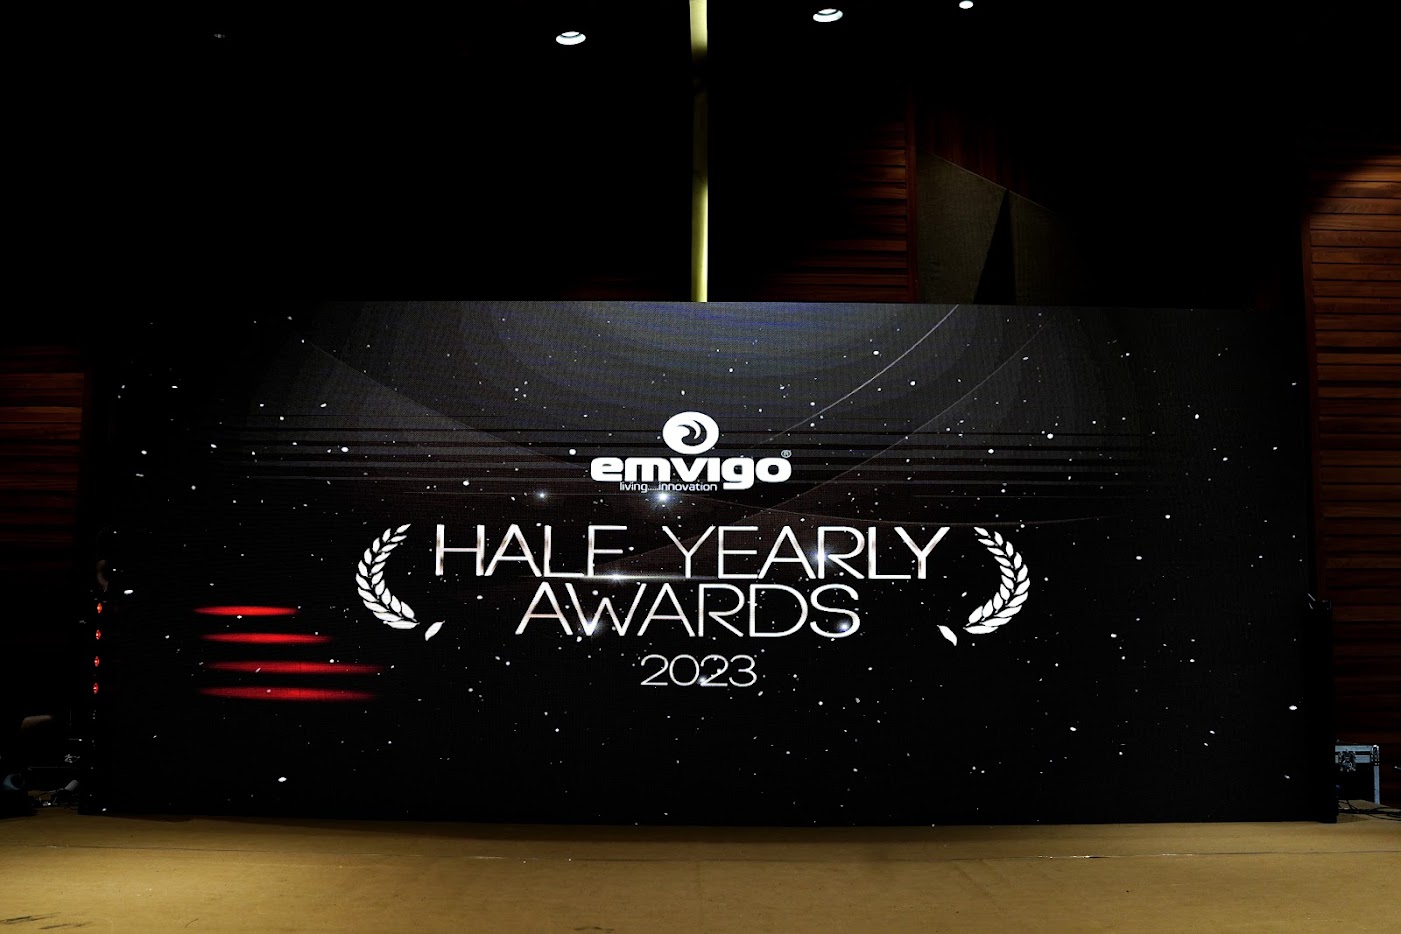 Half-yearly awards